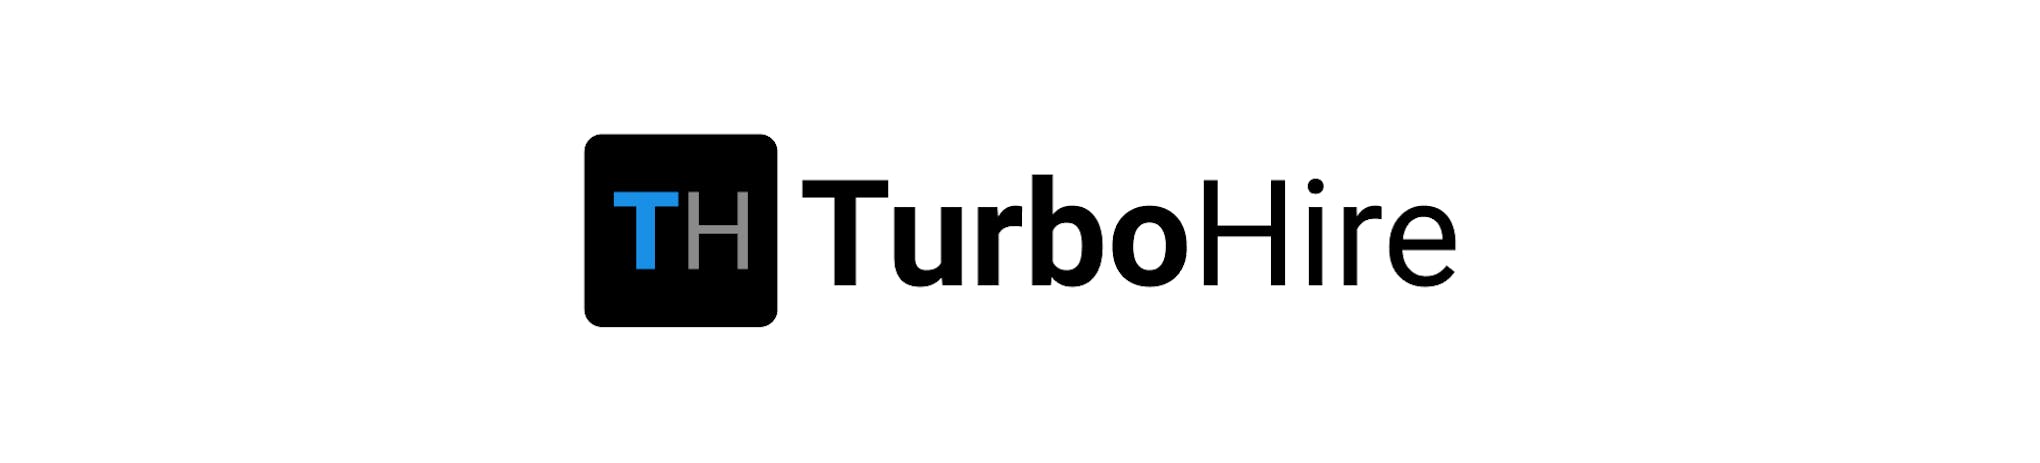 TurboHire.